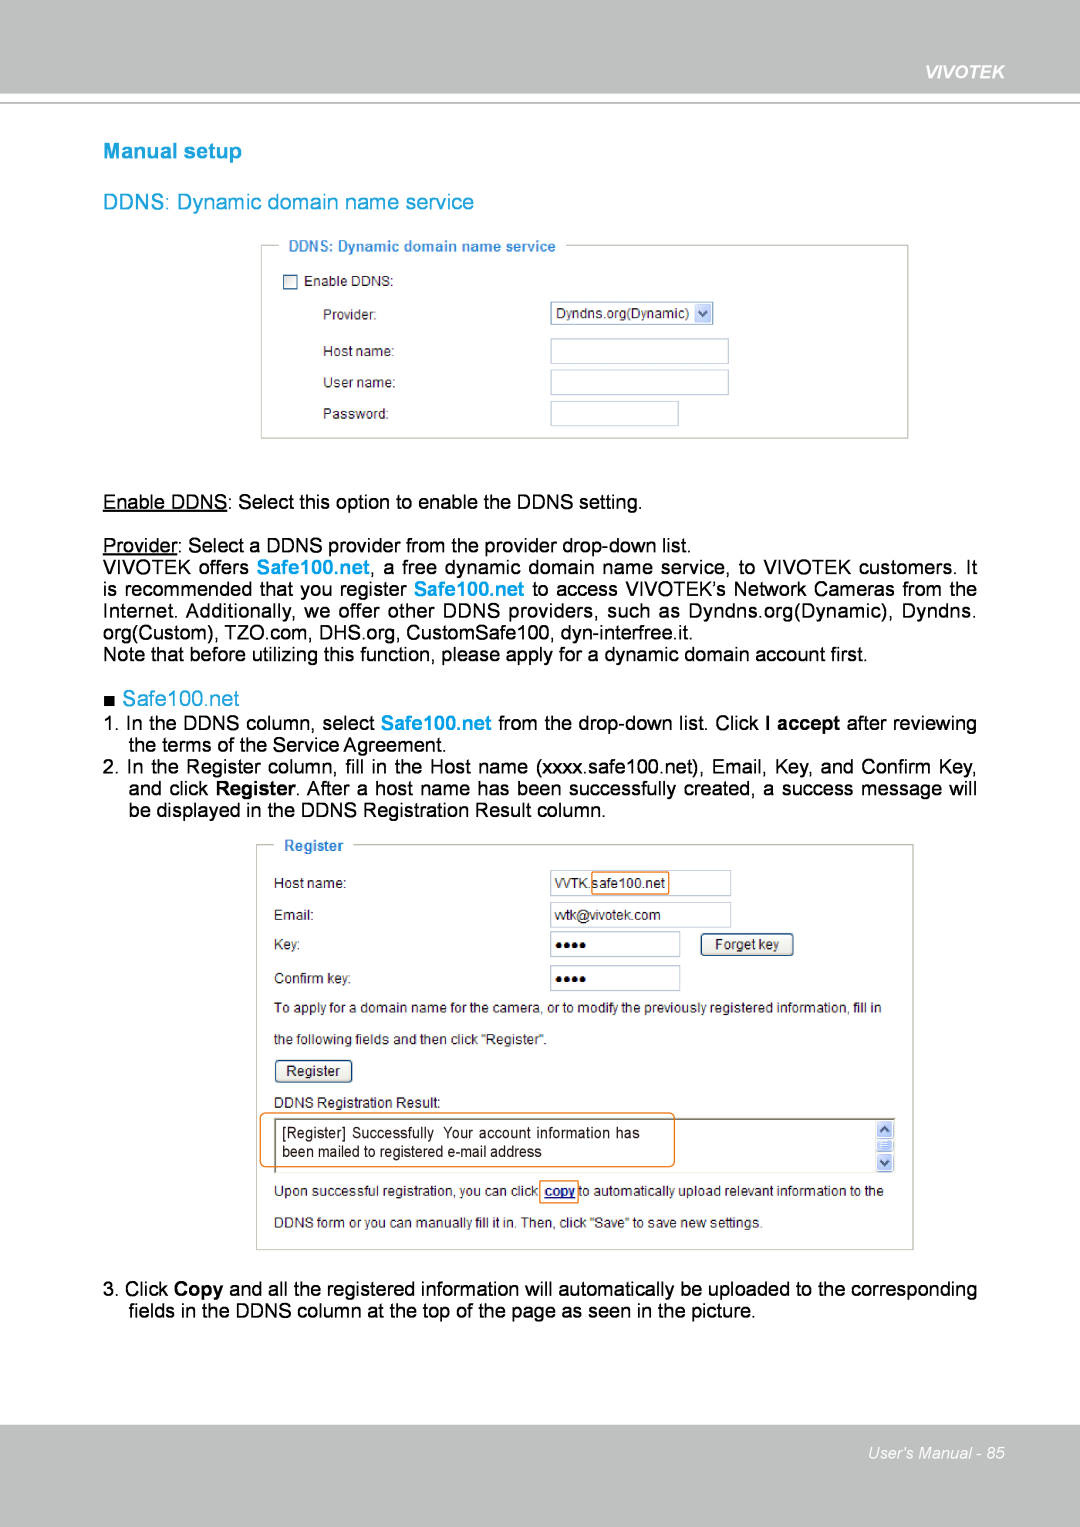 Vivotek FD8167-(T) user manual Manual setup, DDNS: Dynamic domain name service, Safe100.net 